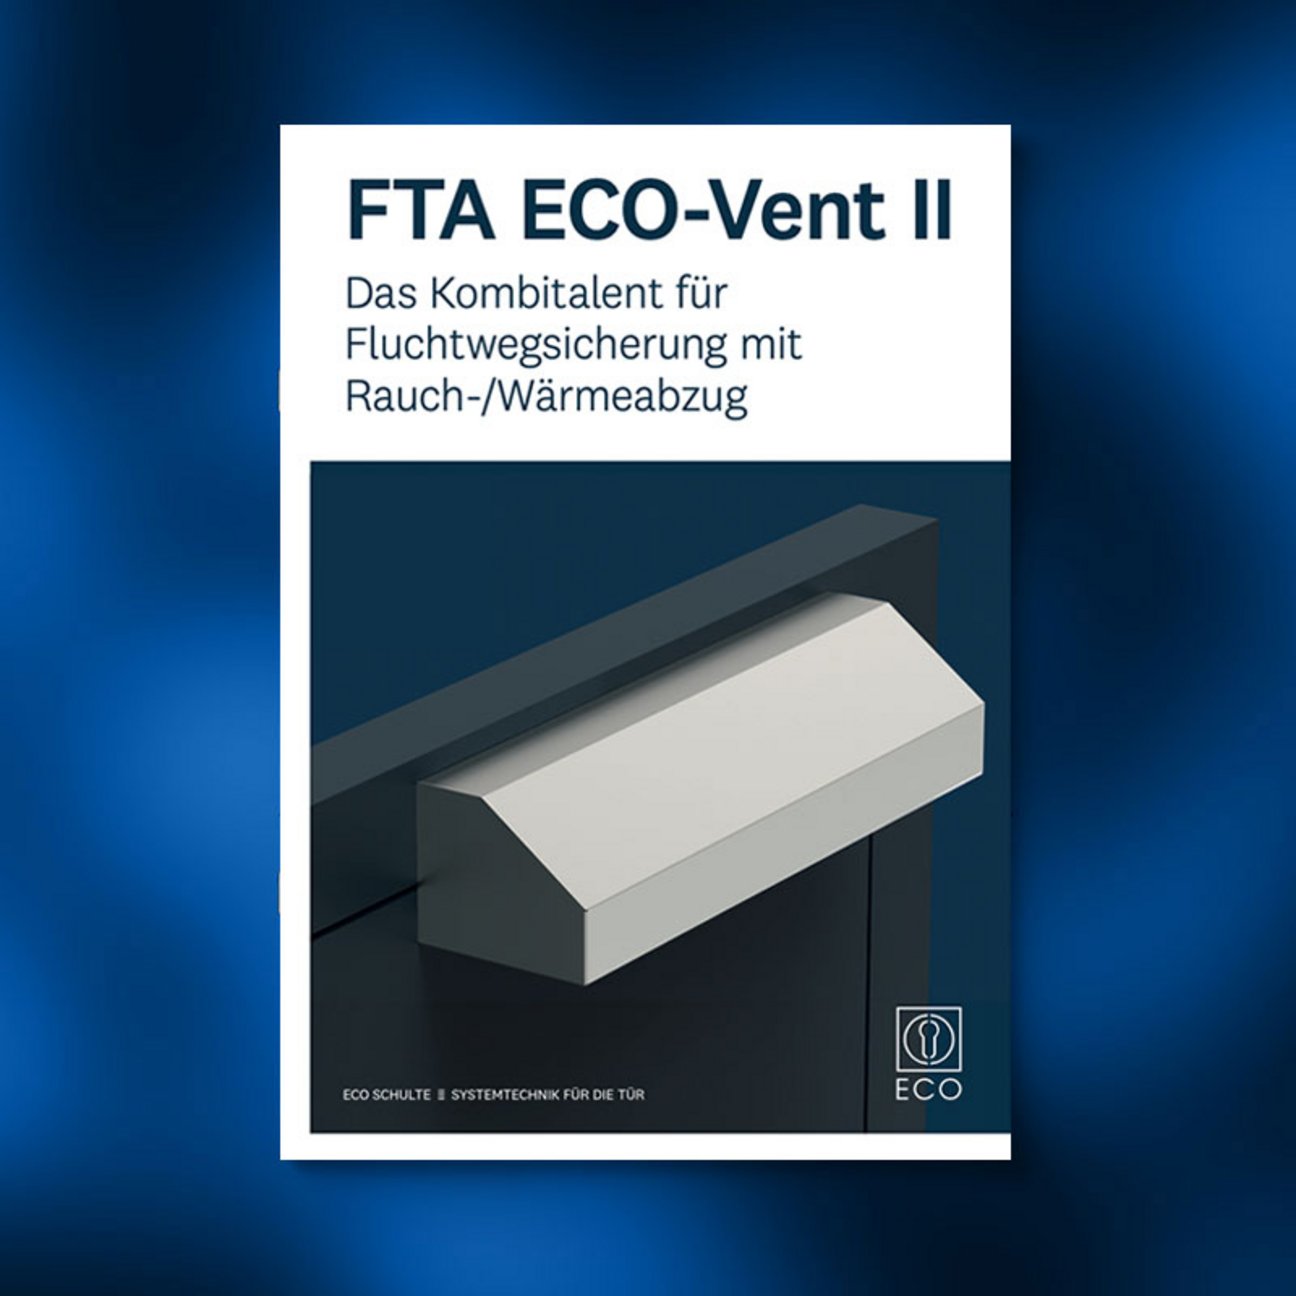 Eco-Schulte_FTA-ECO-Vent-II_Teaser_DE